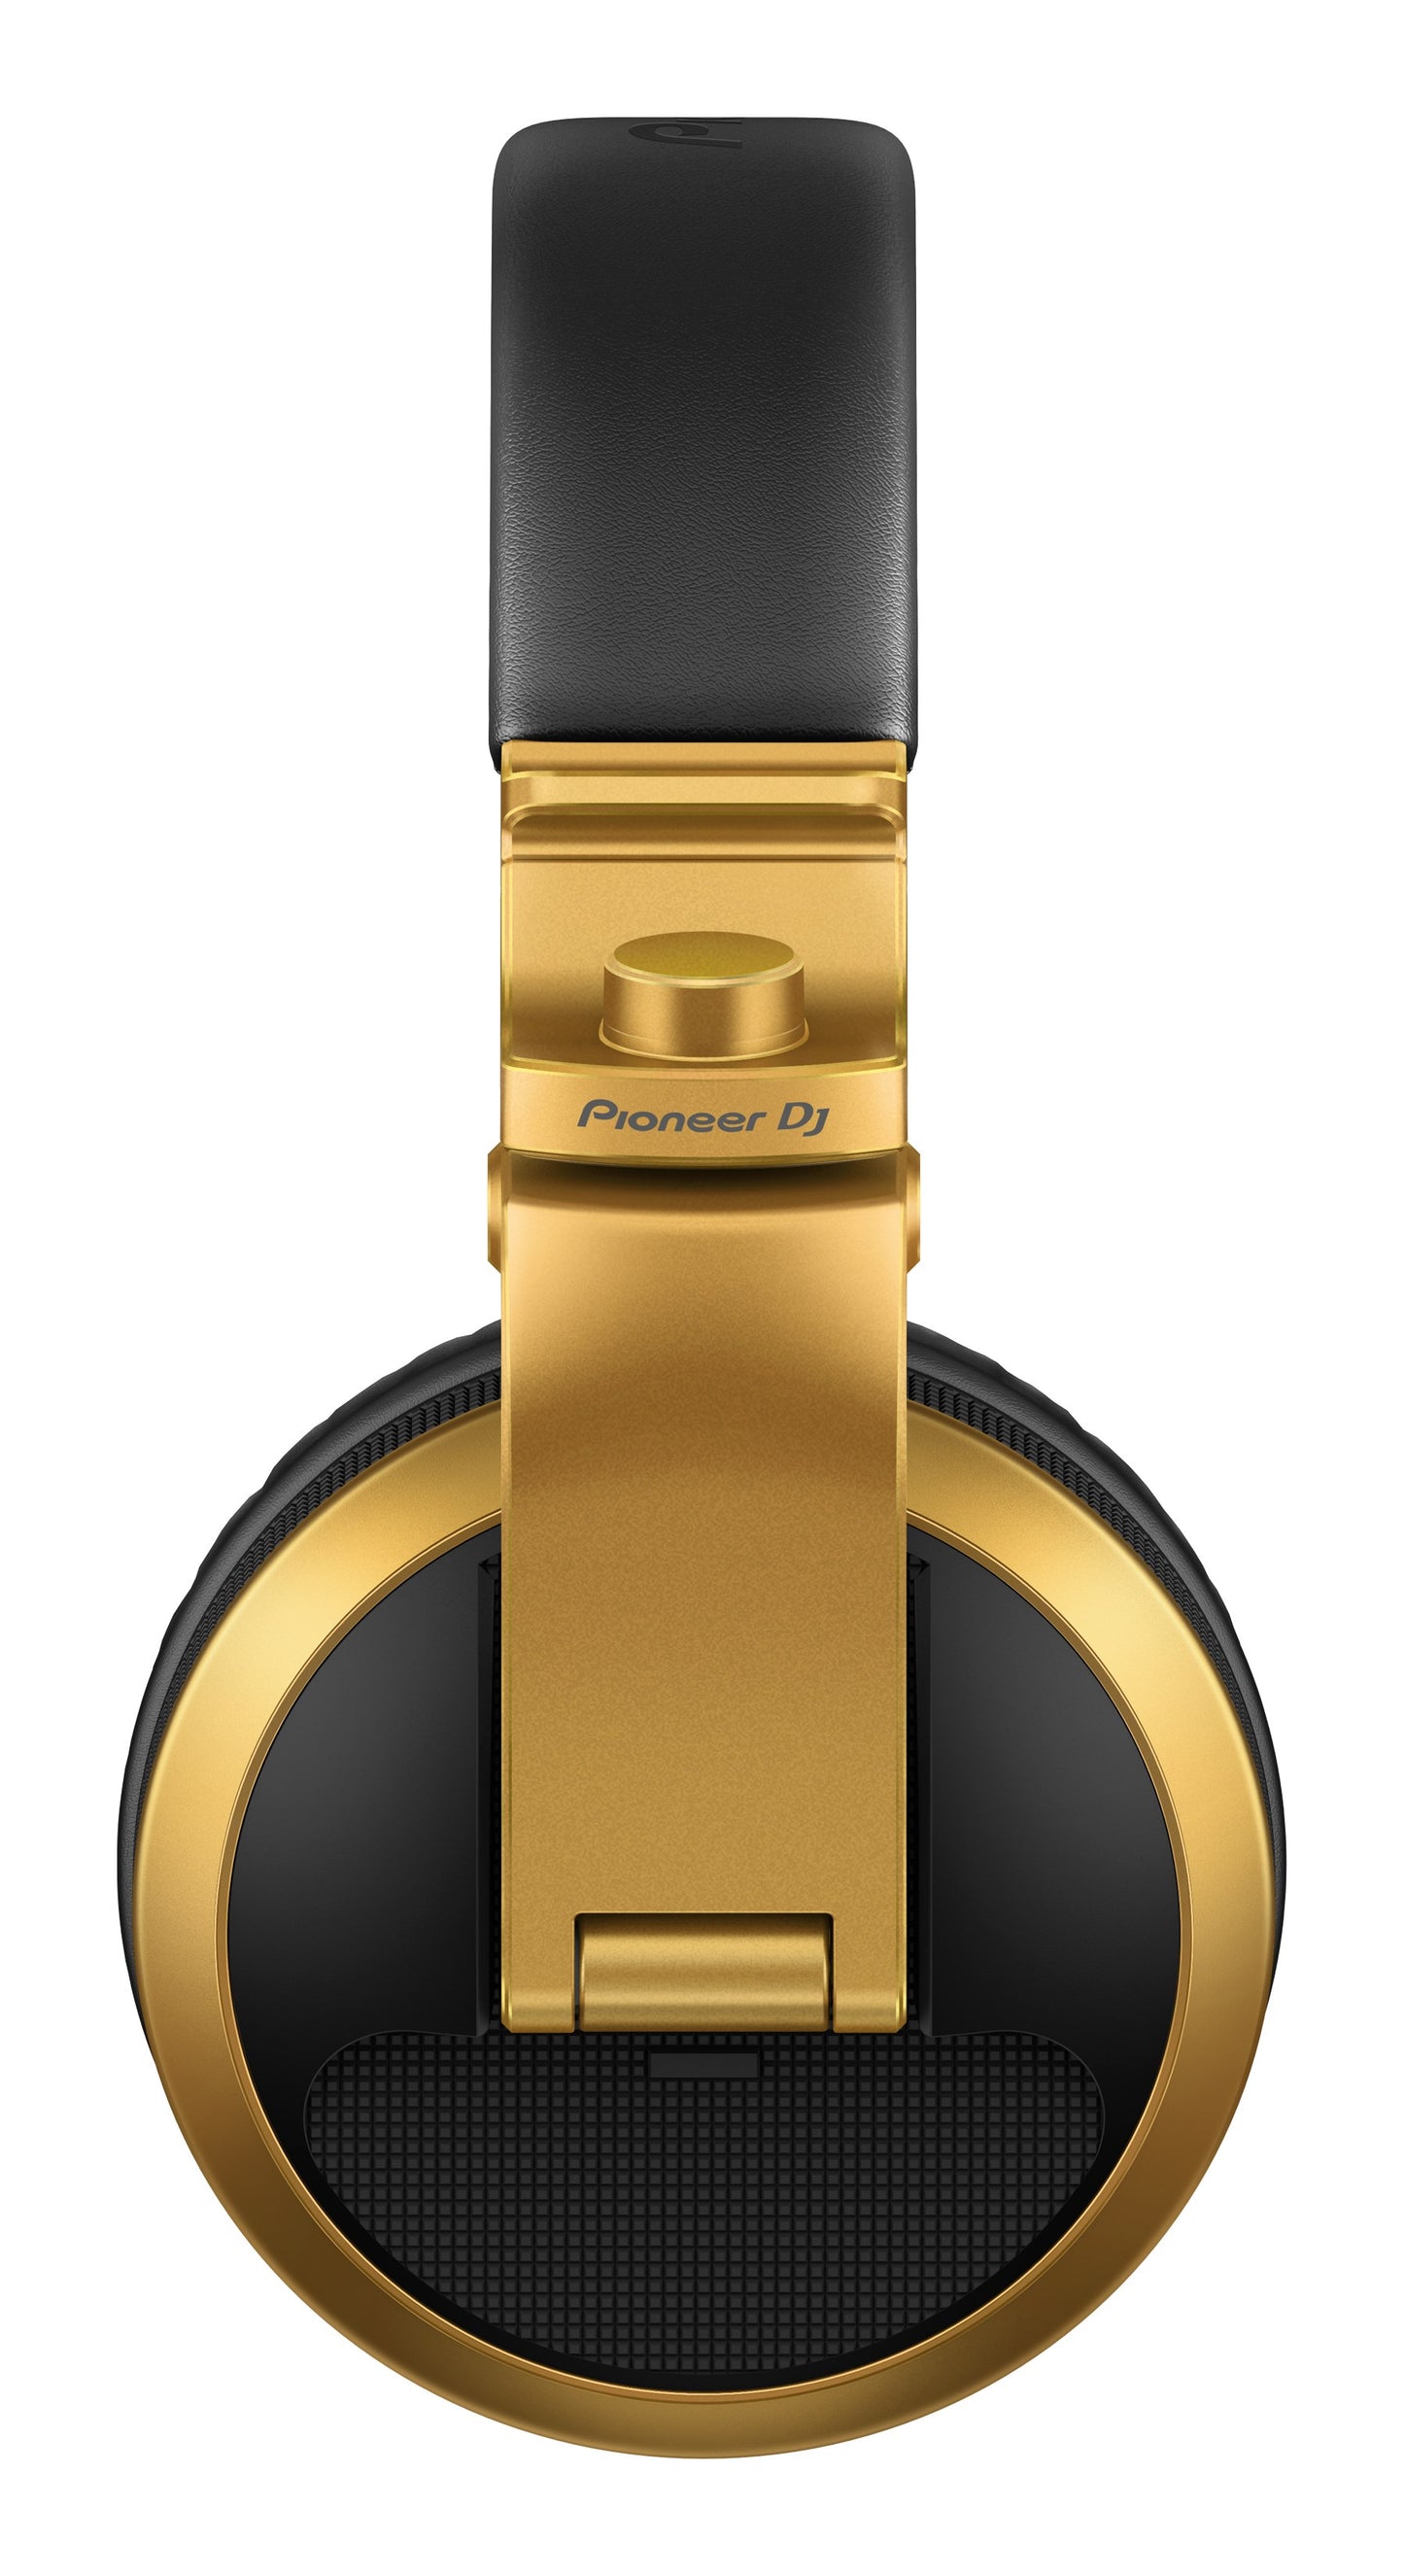 Pioneer DJ HDJ-X5BT-N Over-ear DJ headphones with Bluetooth® functionality - Gold